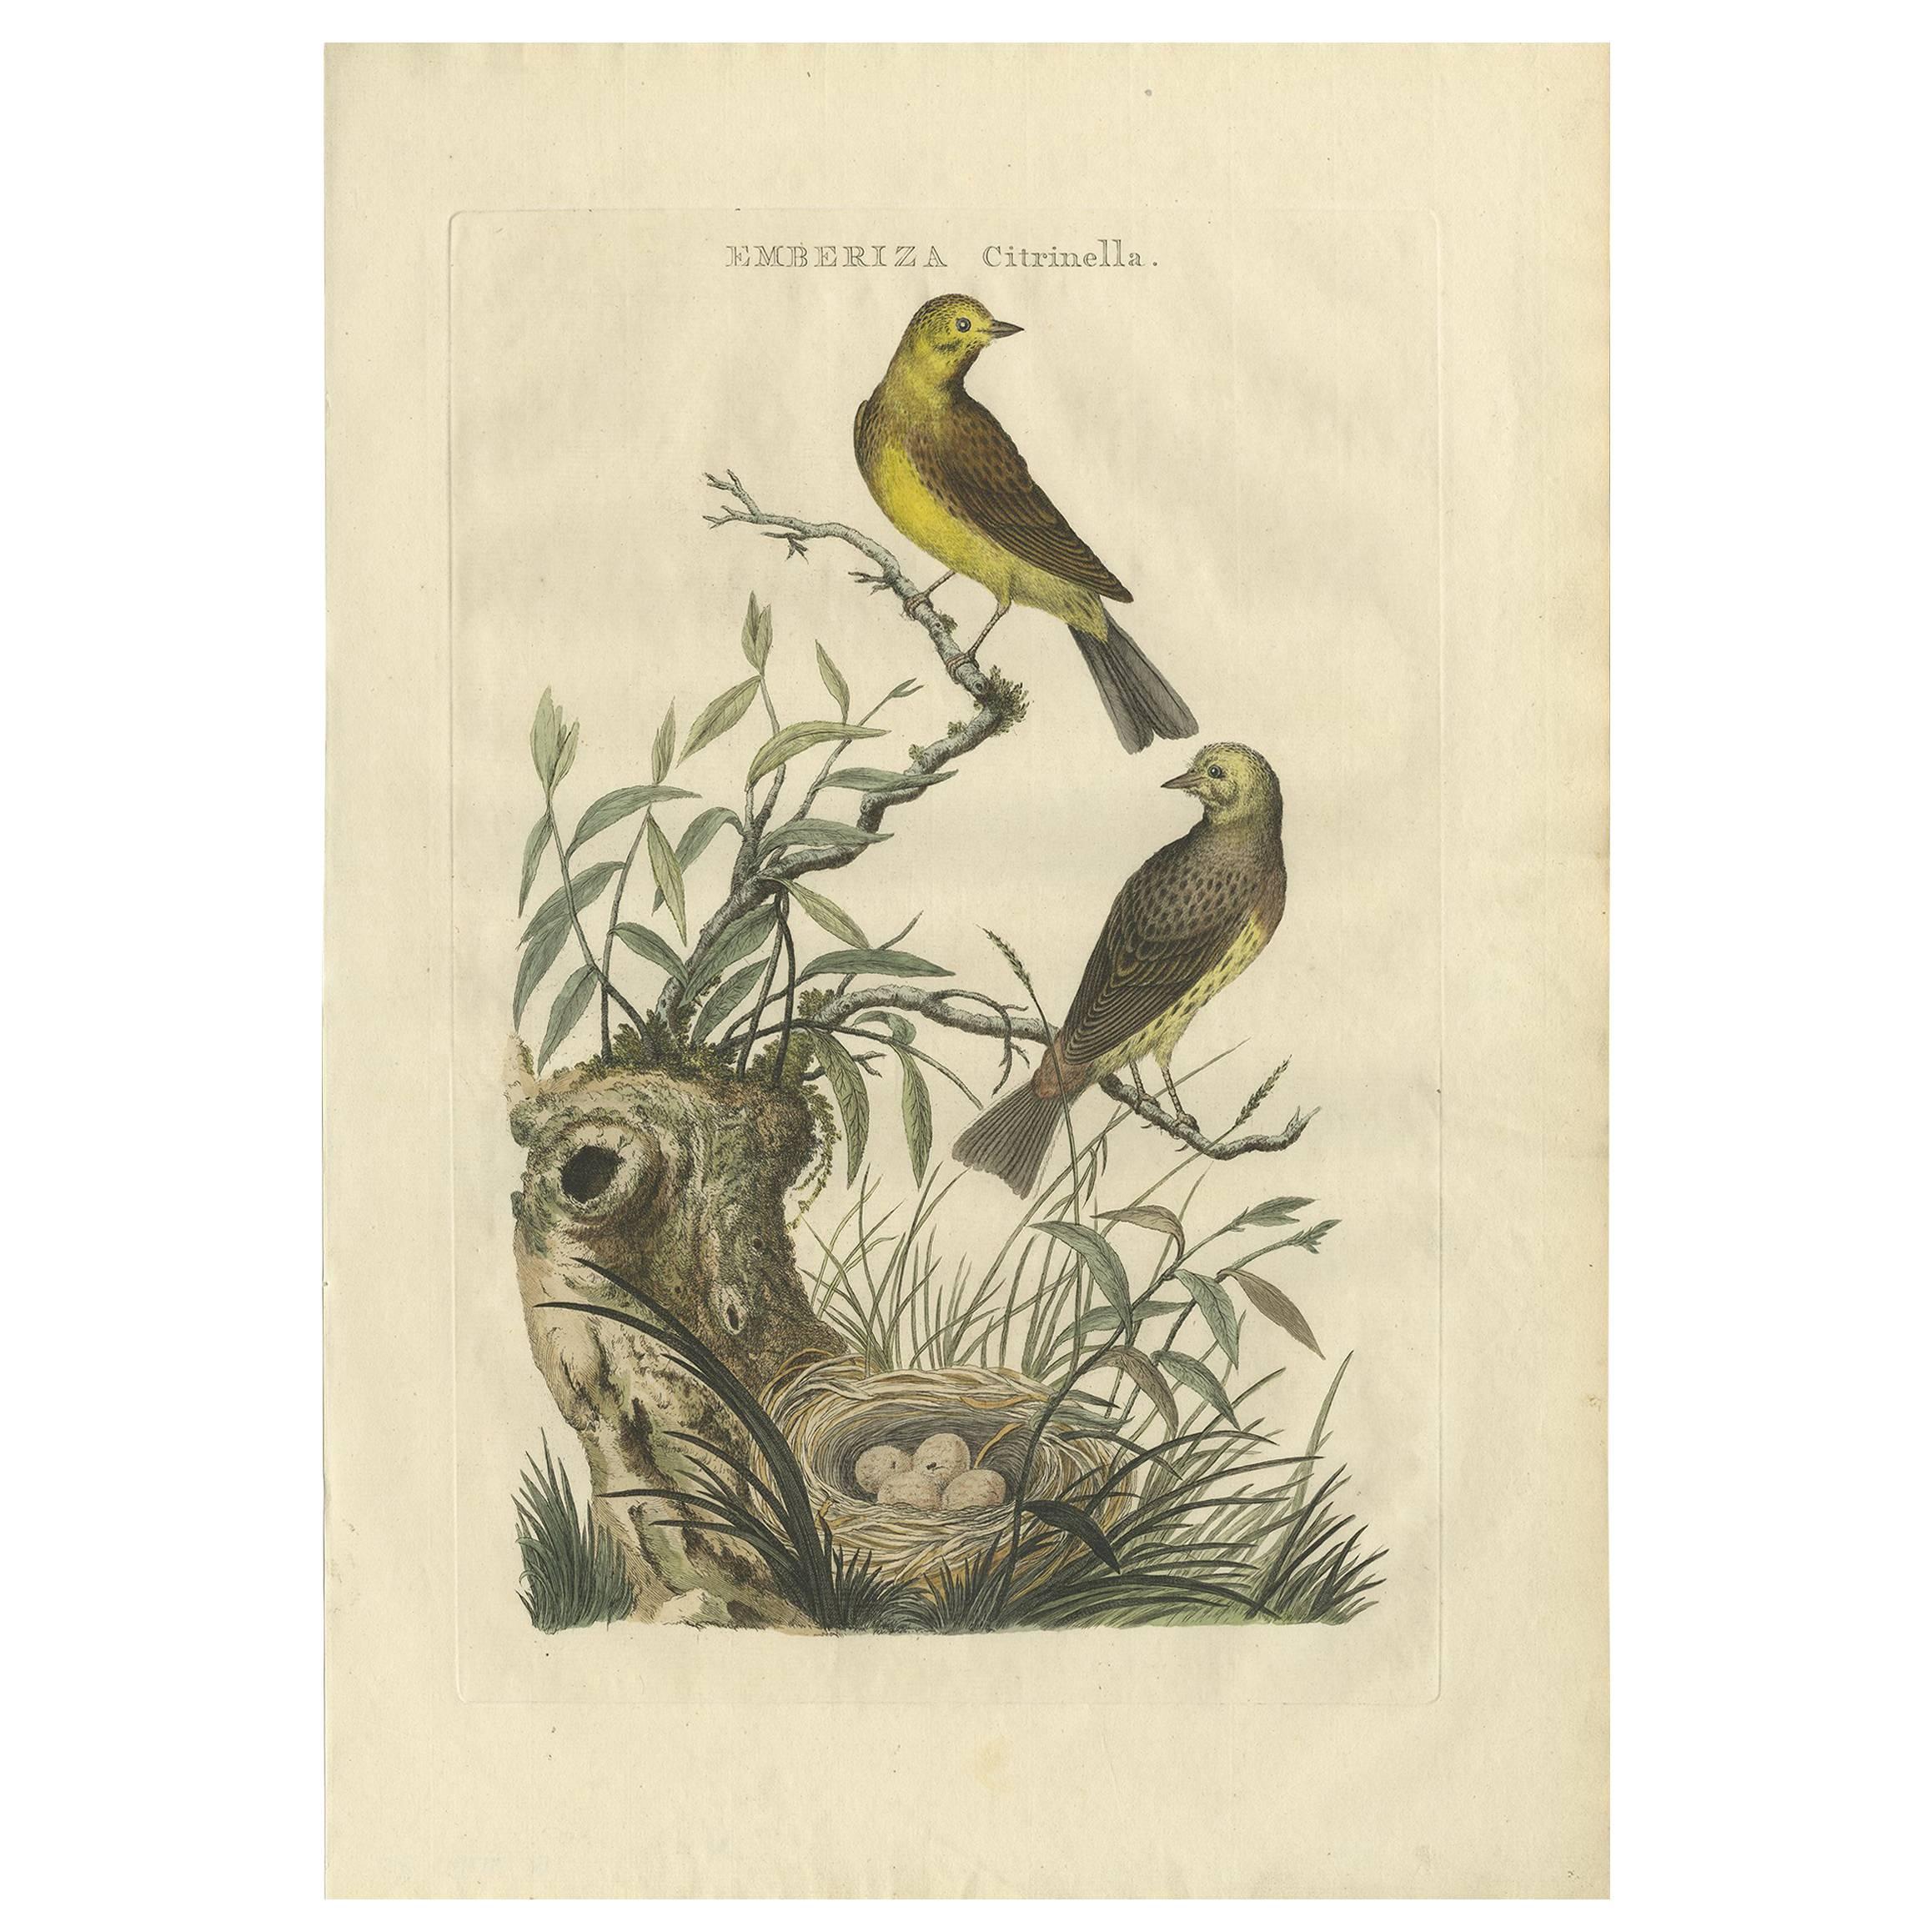 Antique Bird Print of the Yellowhammer by Sepp & Nozeman, 1789